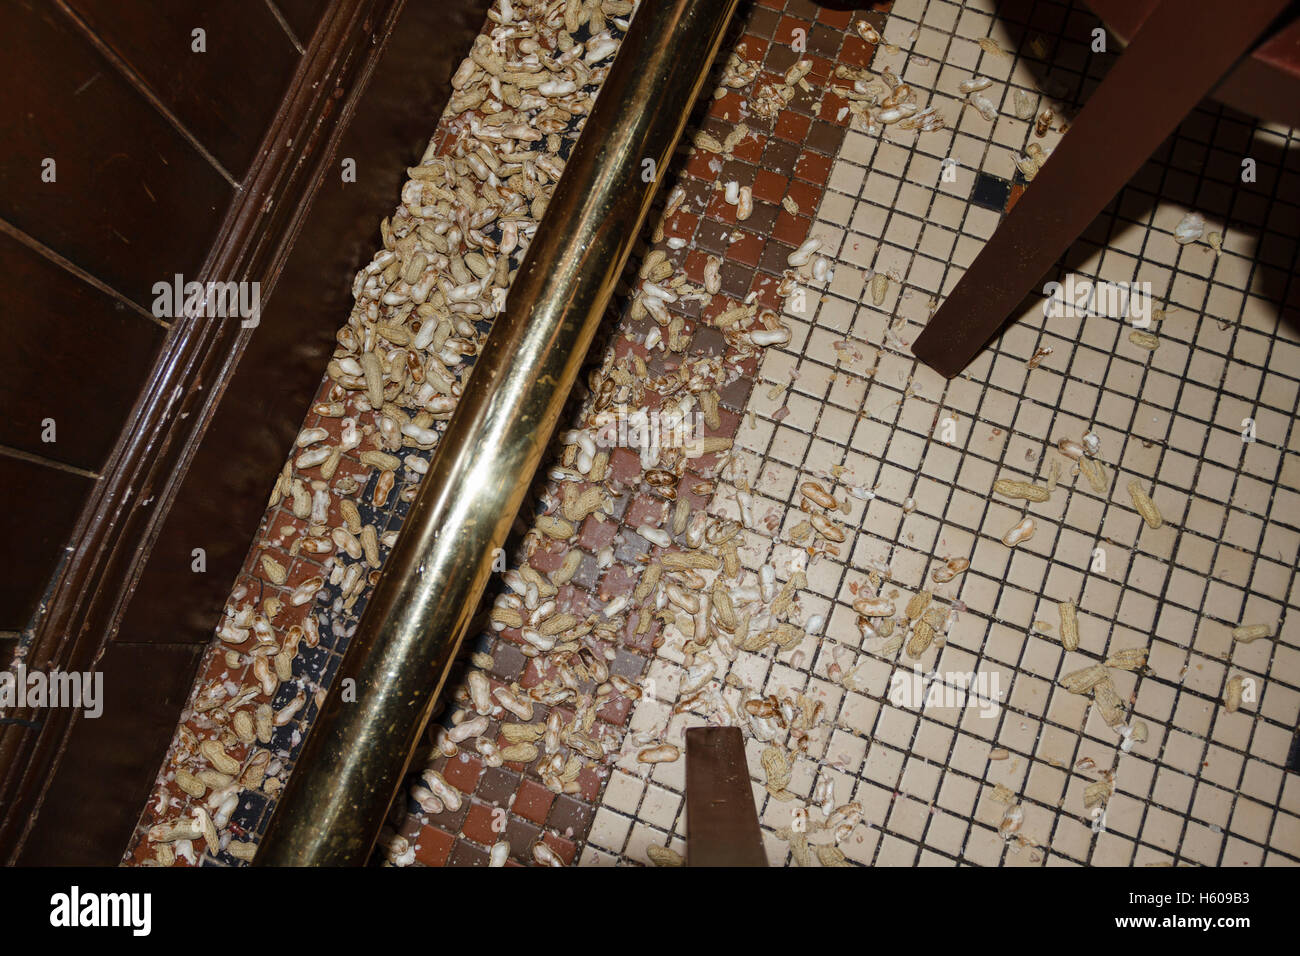 Peanut shells on the floor in The Long Bar, Raffles hotel, Singapore Stock Photo